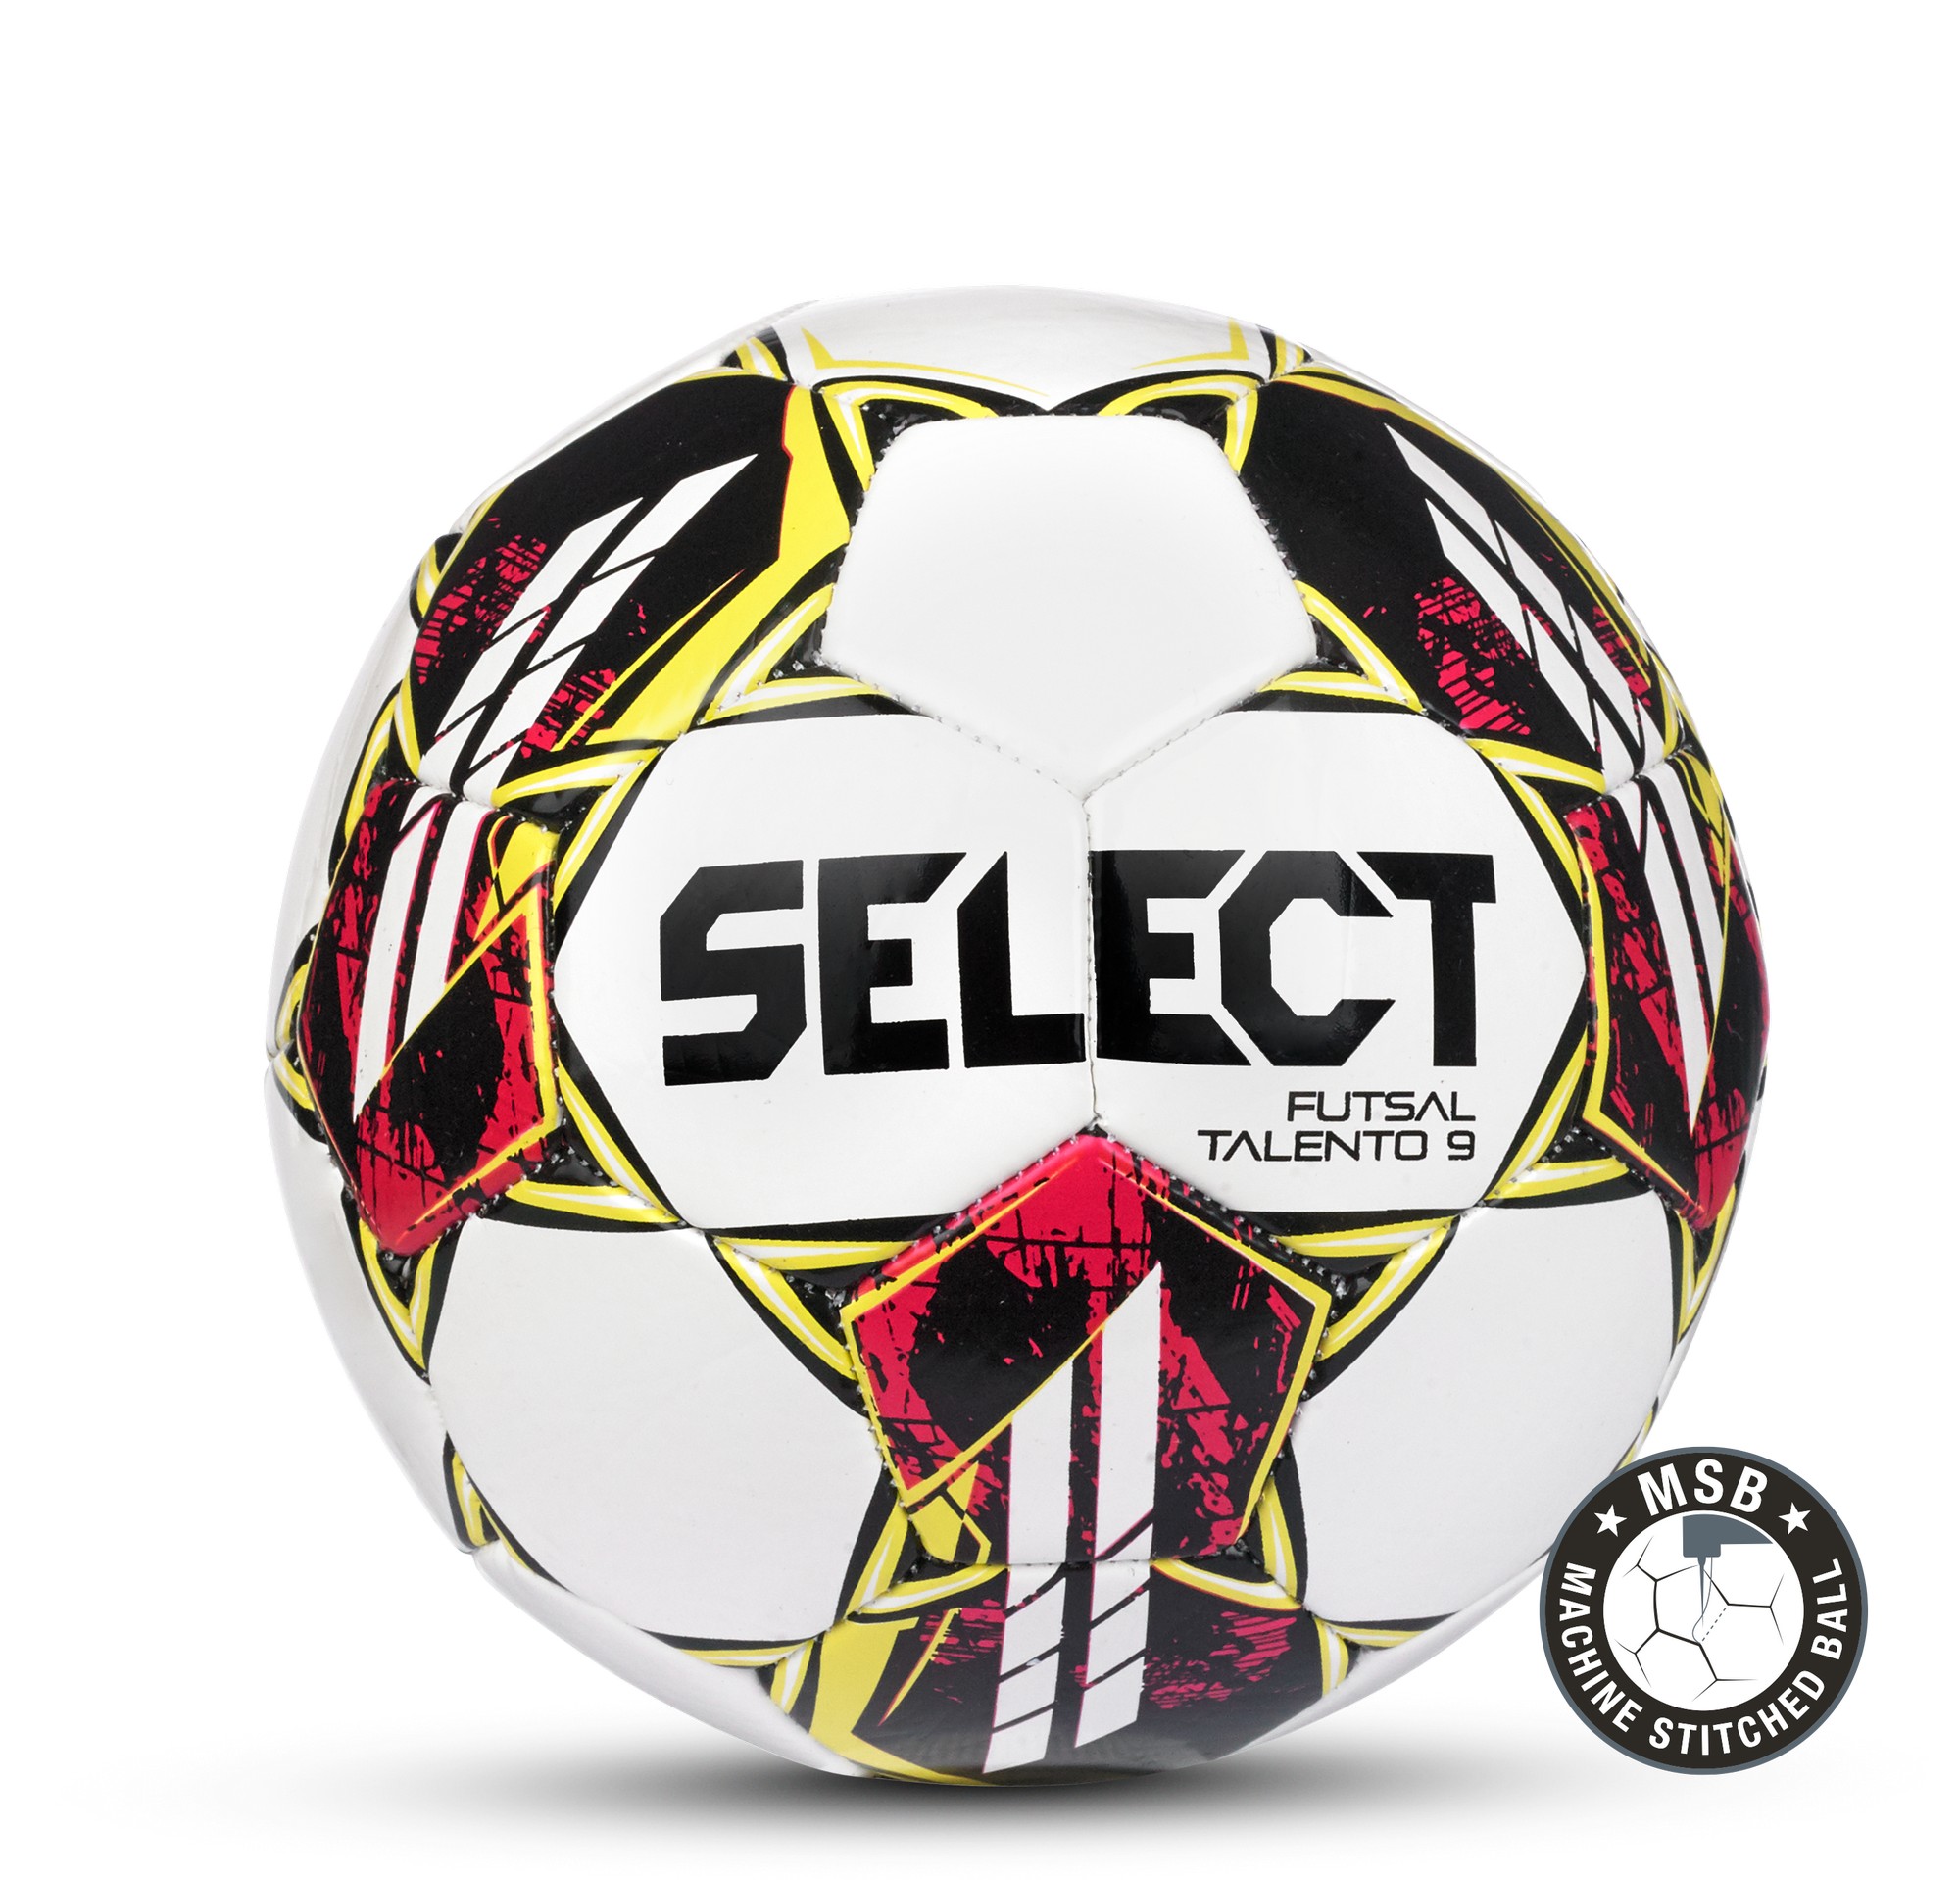 Футзальный мяч Select Futsal Talento 9 v22 1060460005